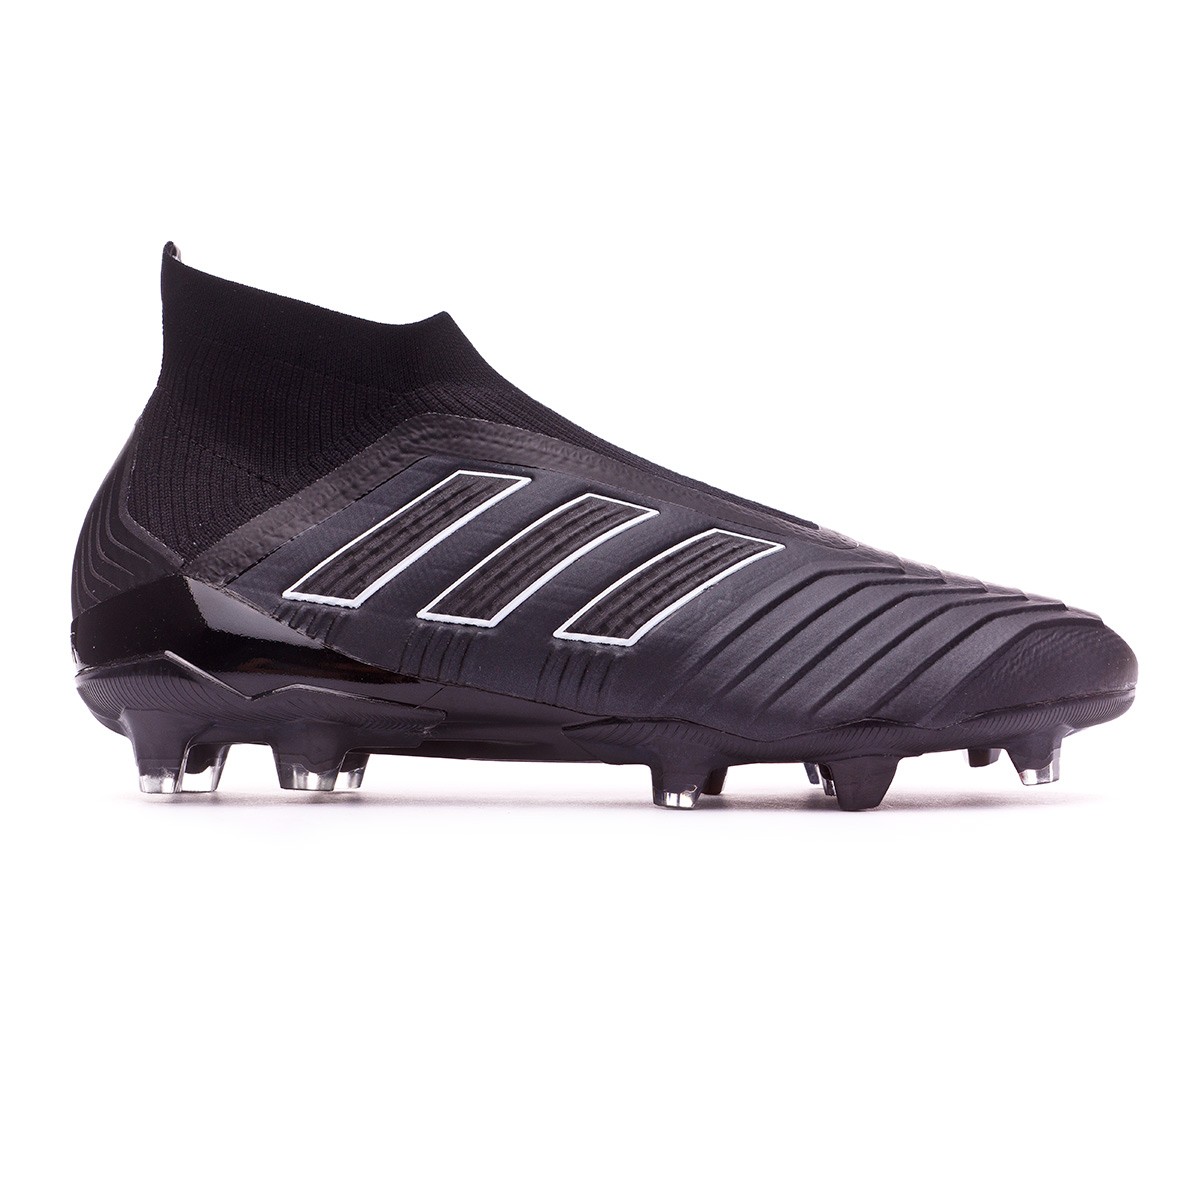 Football Boots Adidas Predator 18 Fg Core Black White Football